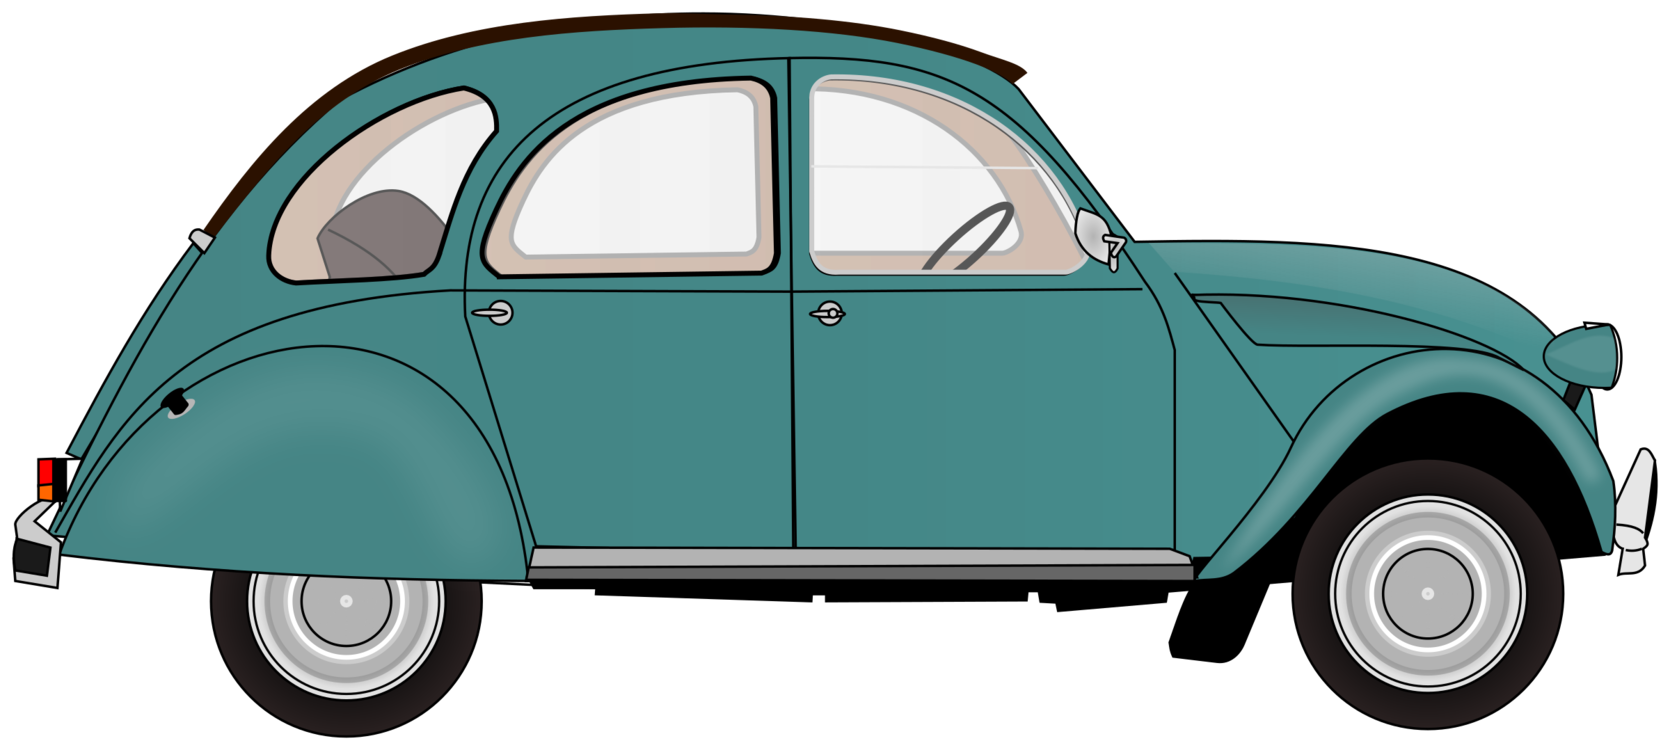 Classic Car,City Car,Compact Car